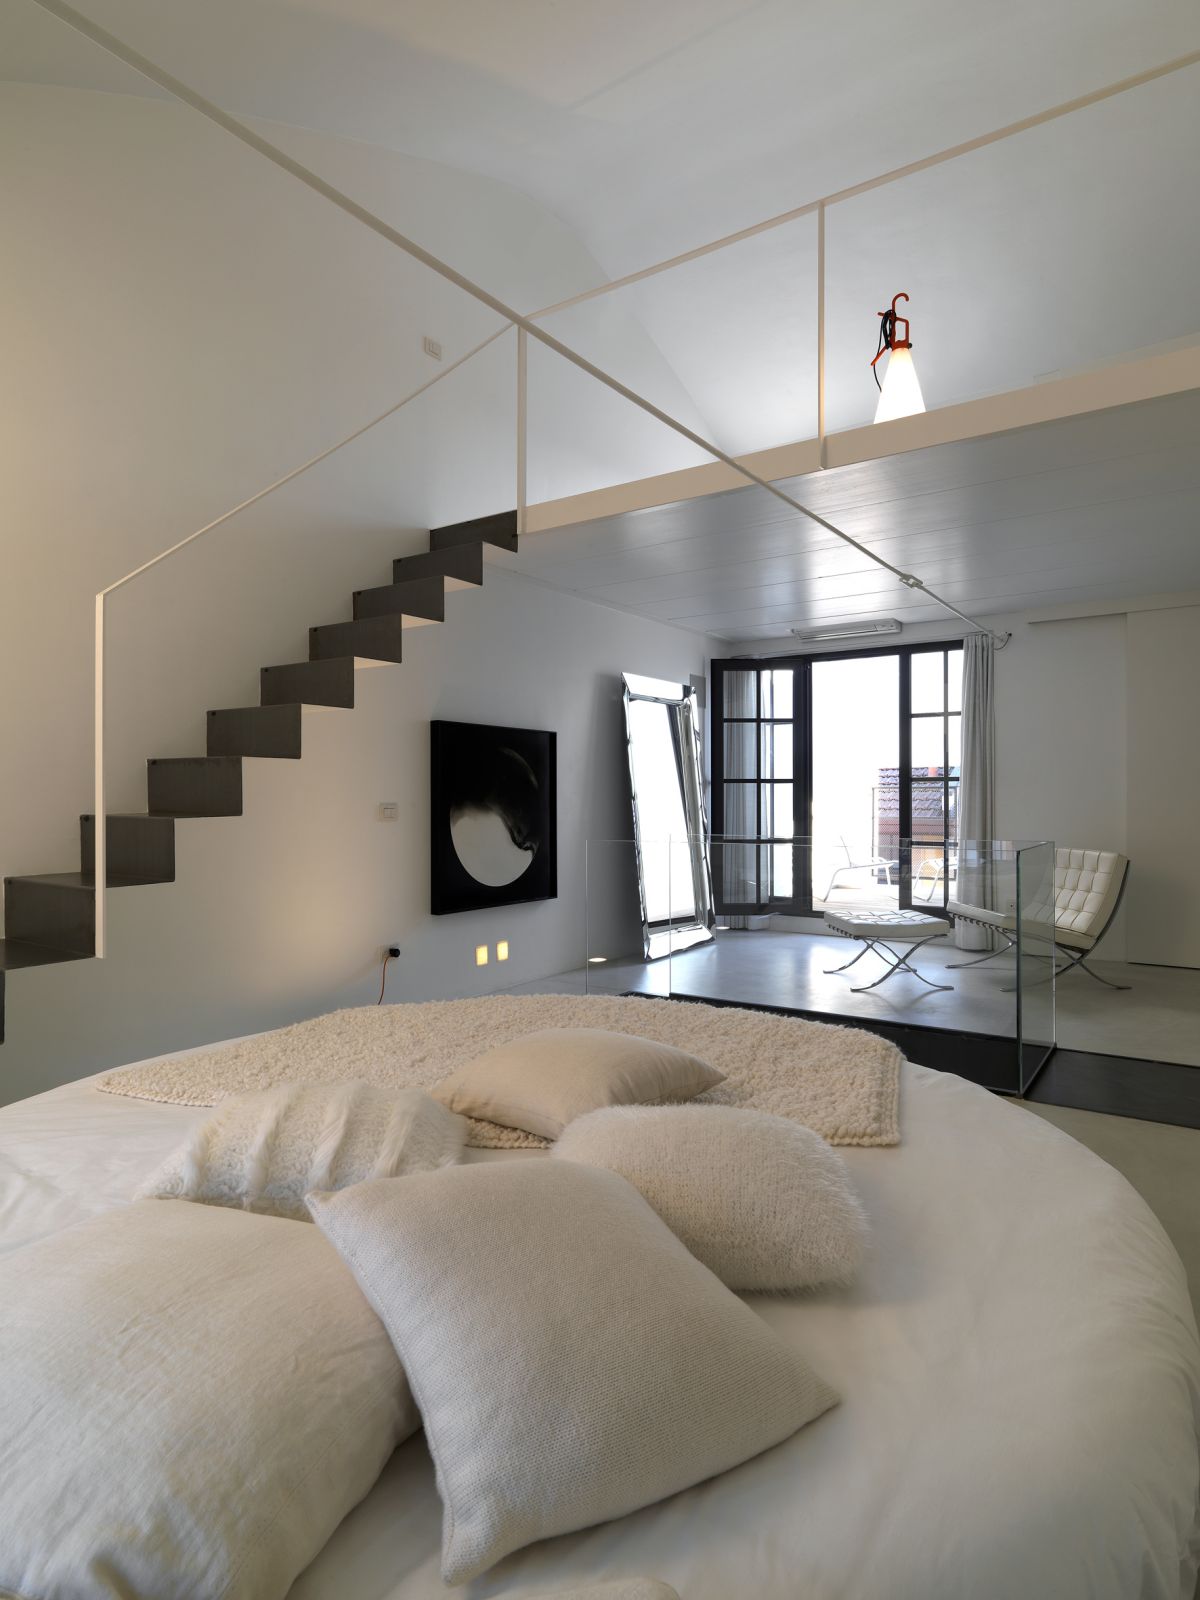 32 Interior Design Ideas for Loft Bedrooms Interior